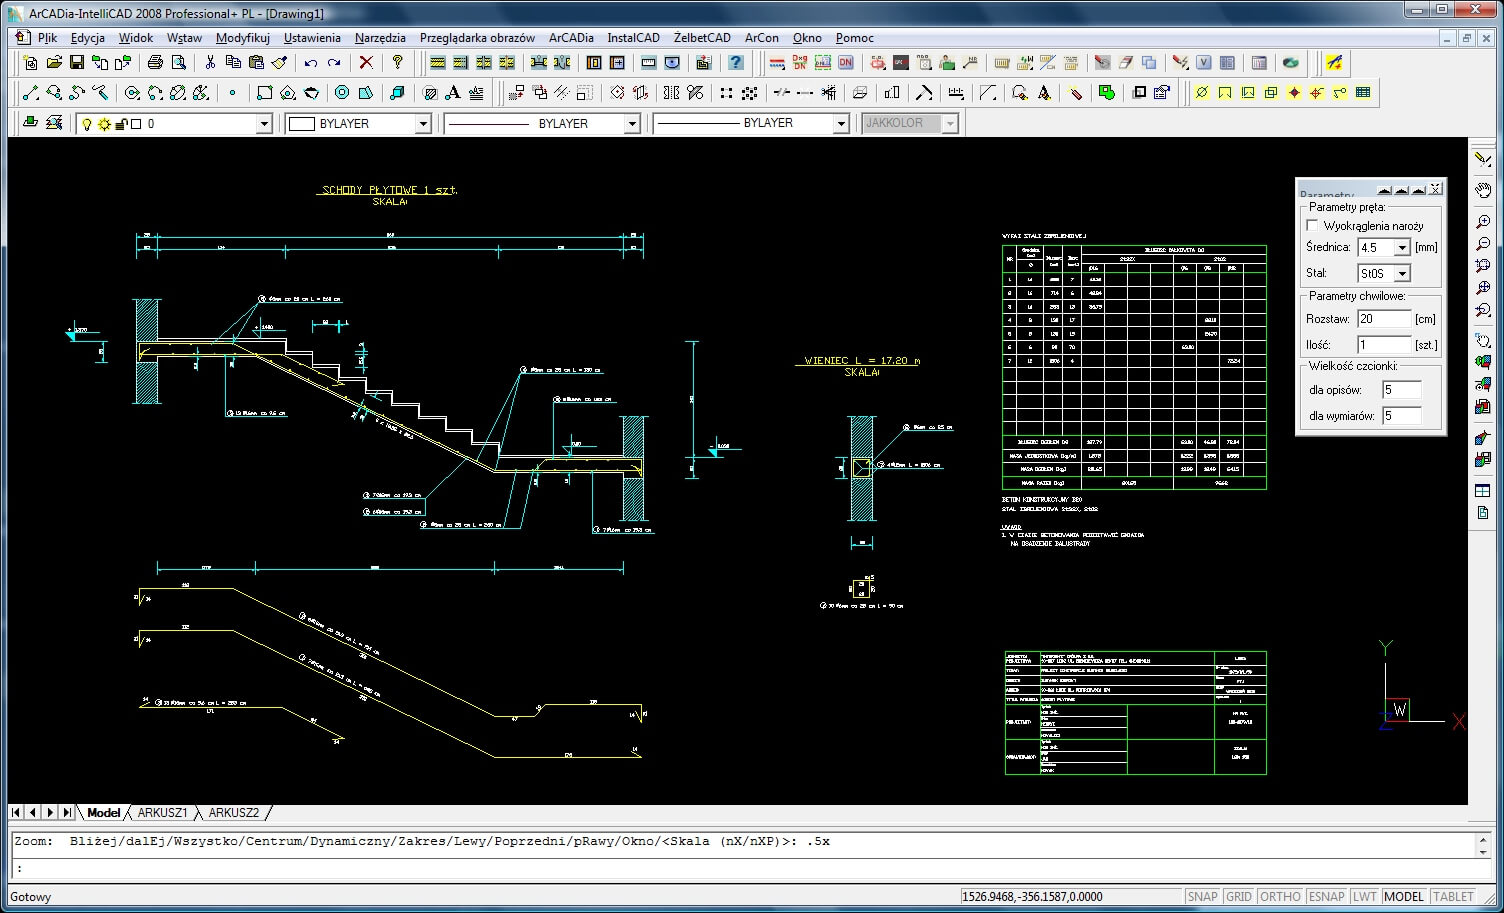 Konstruktor – Rysunki DXF – Schody płytowe | INTERsoft program CAD